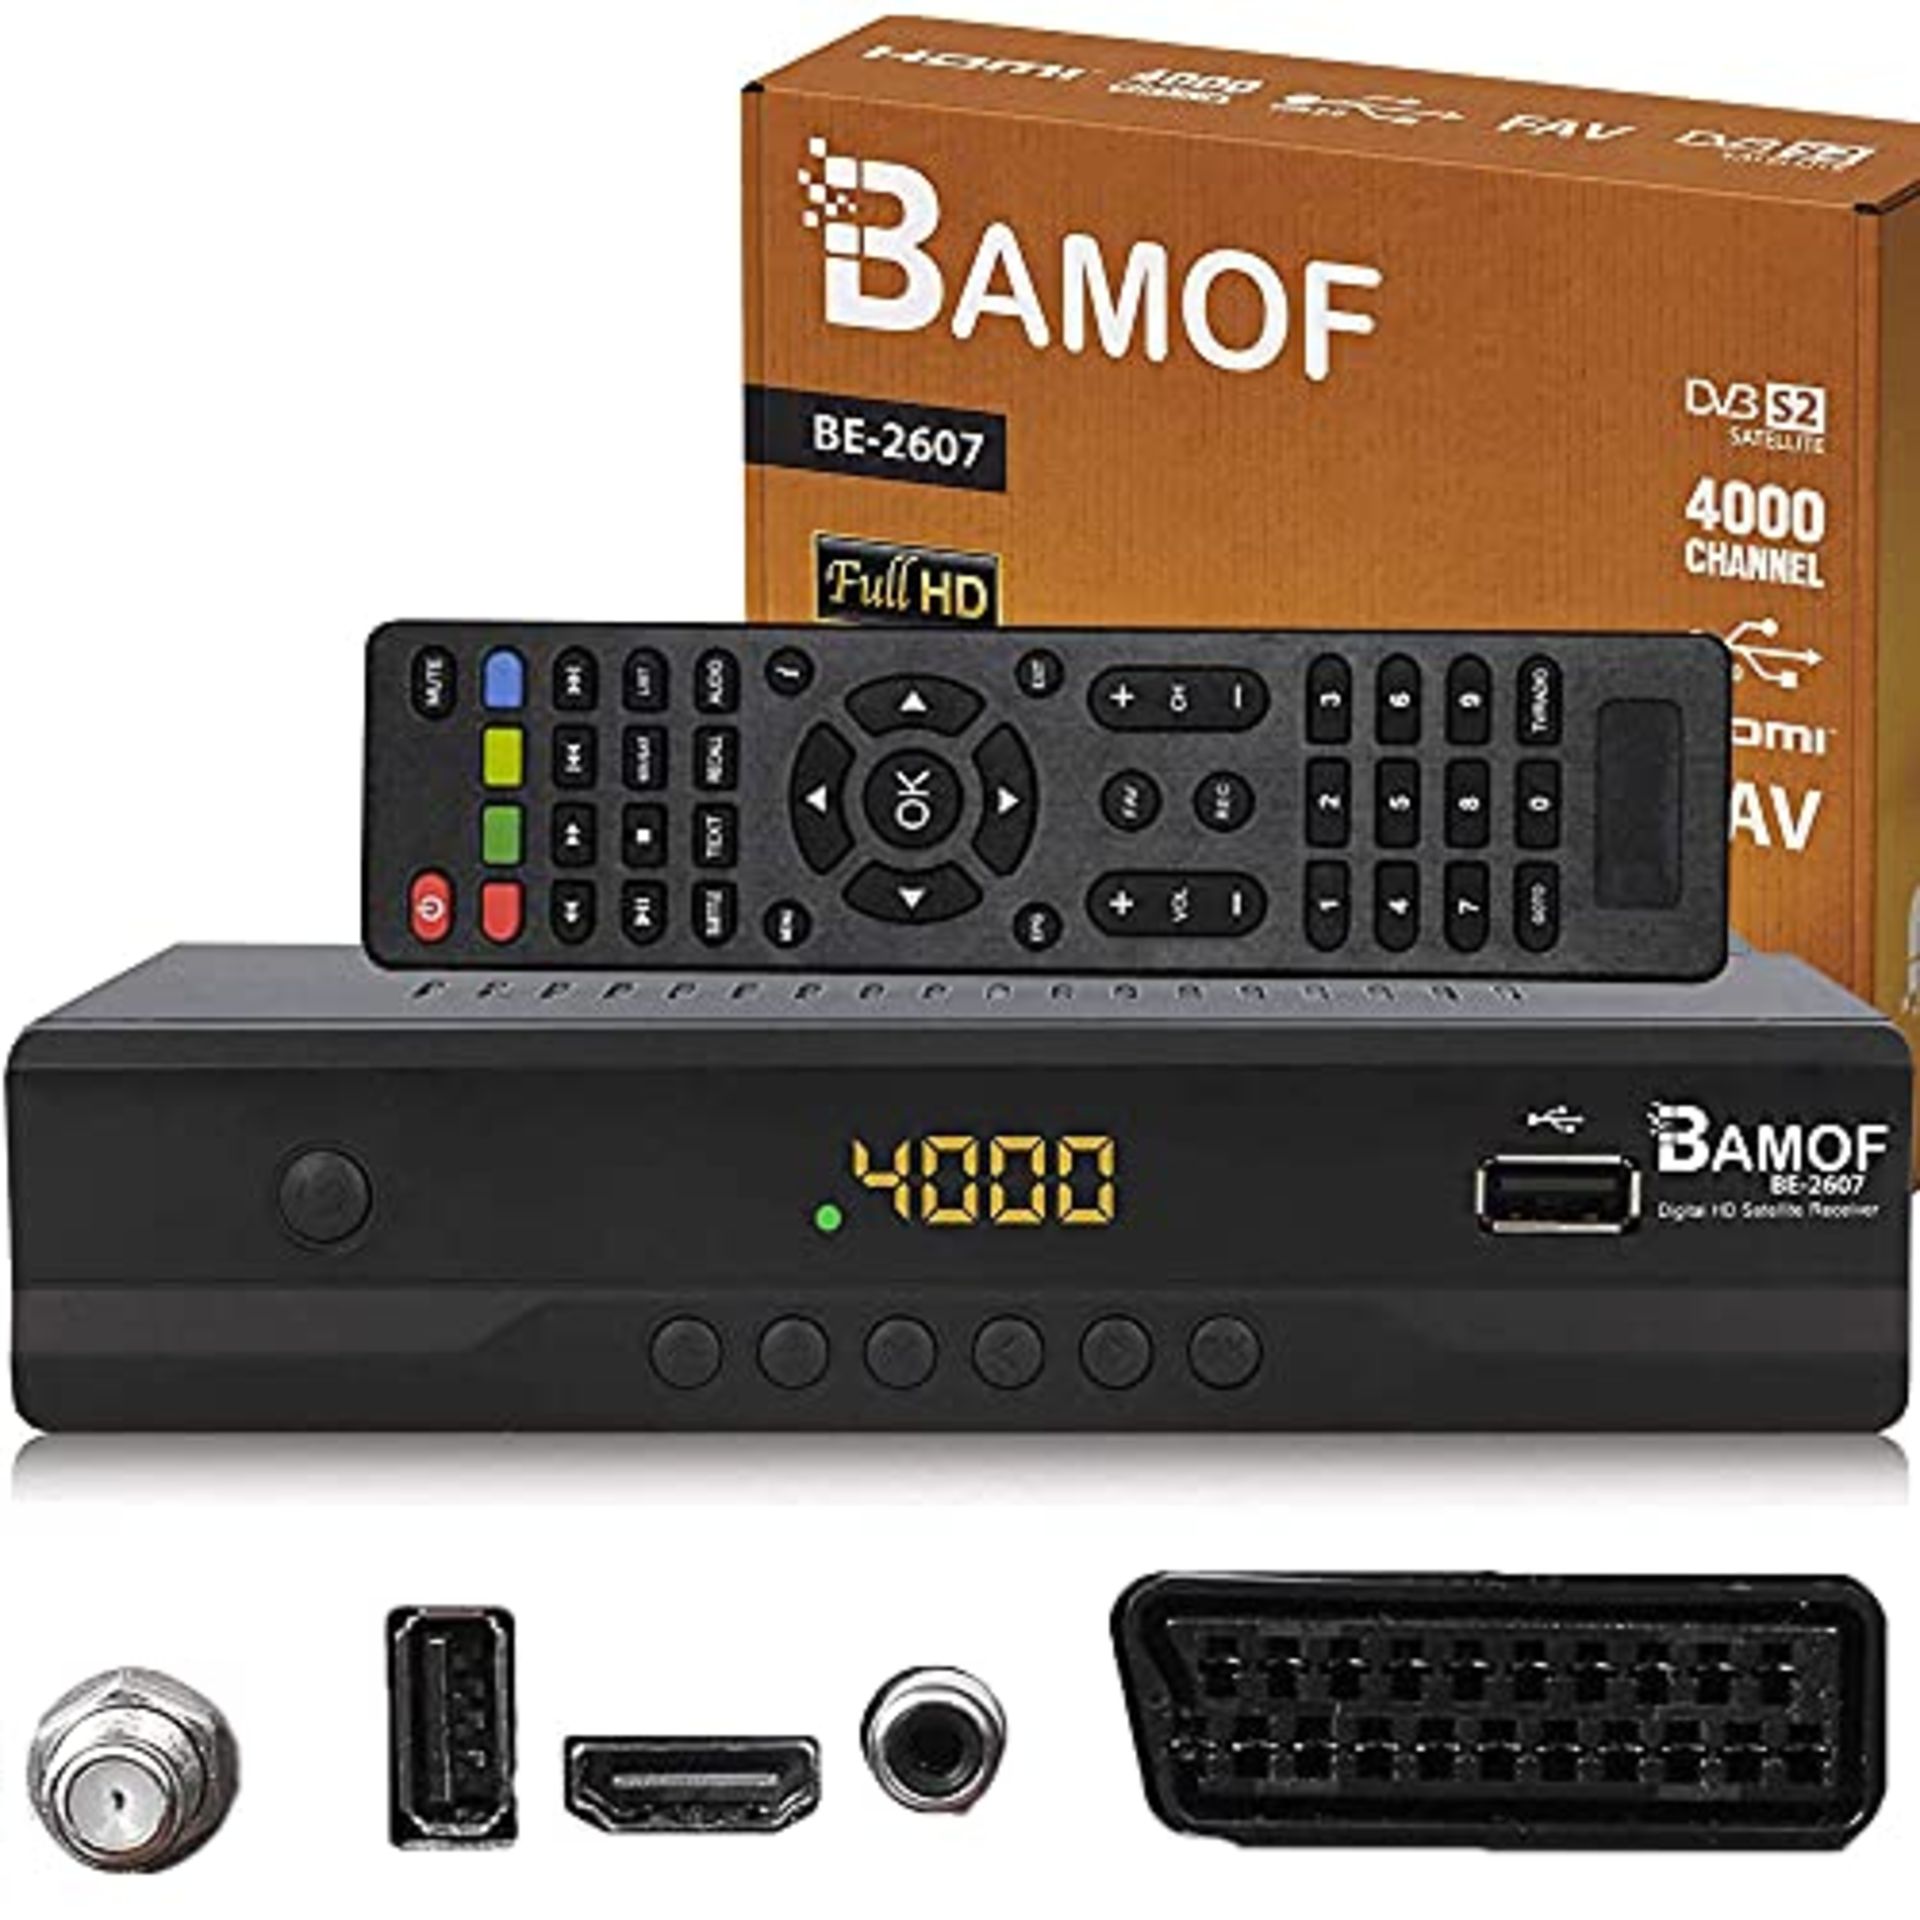 Bamof BE-2607 Digital Satellite Satellite Receiver (HDTV, DVB-S/S2, HDMI, SCART, 2x US